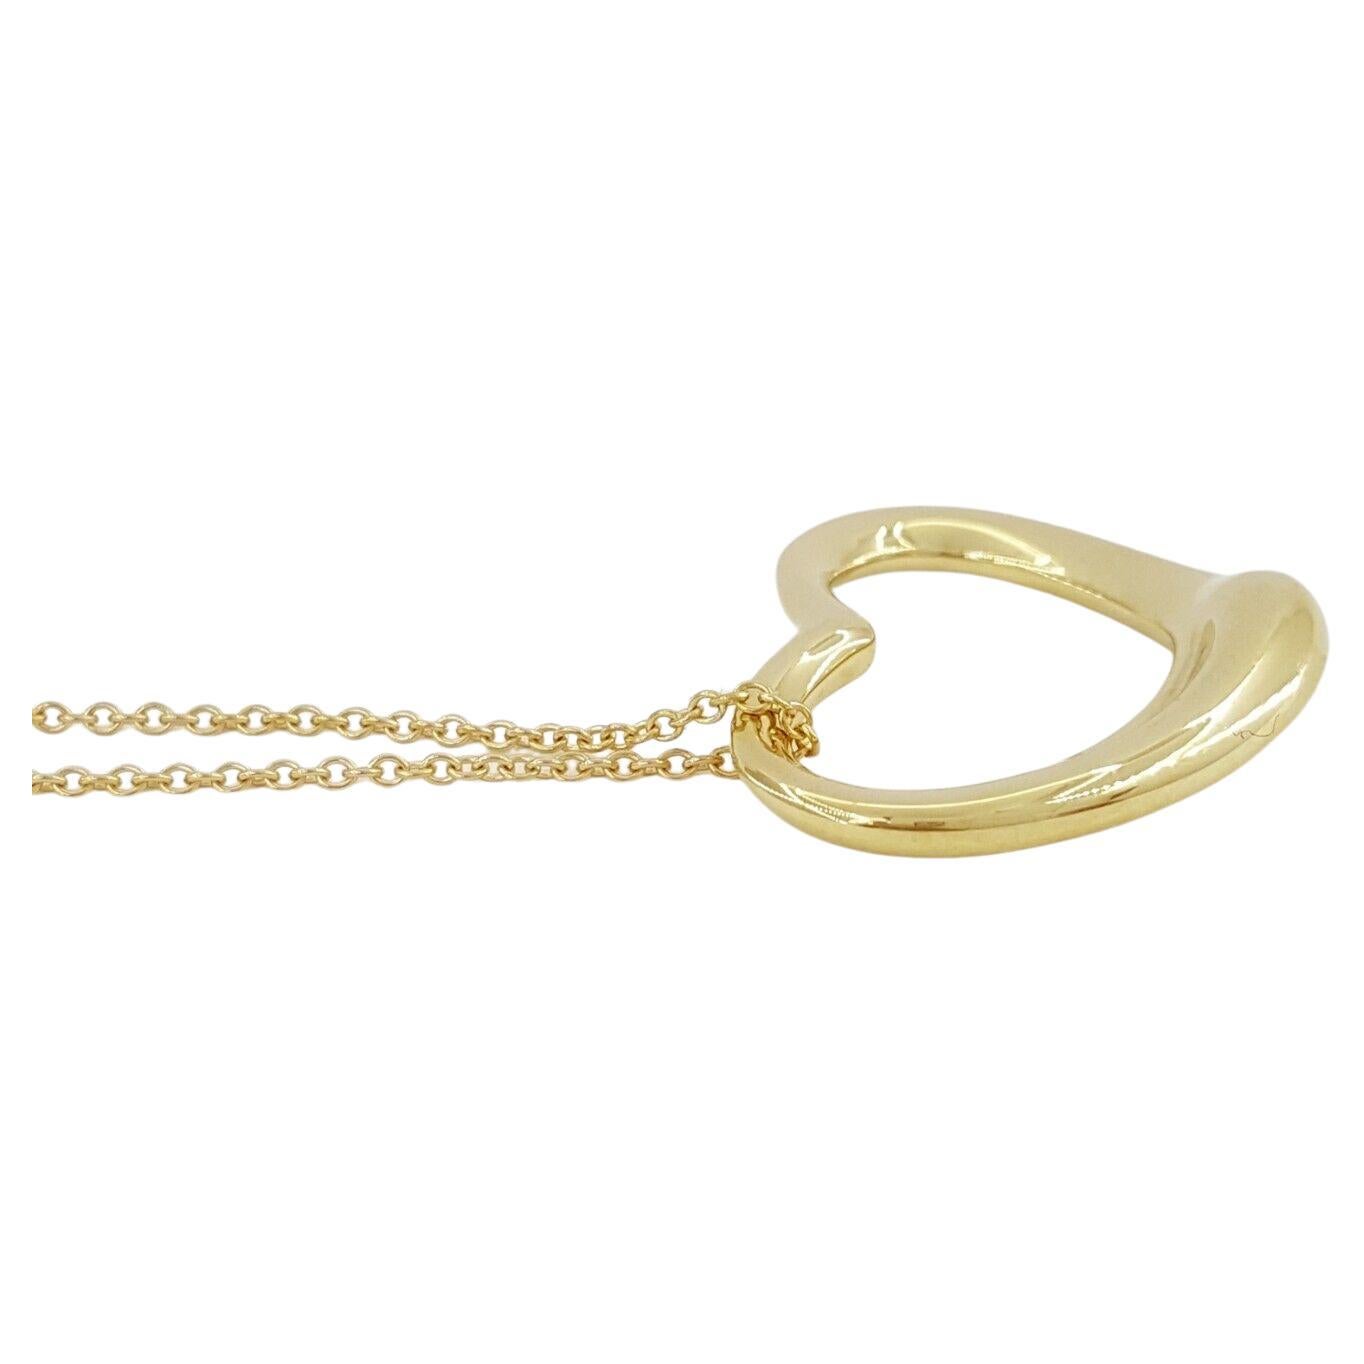 Tiffany & Co. 18K Yellow Gold Medium Open Heart Pendant / Necklace.

